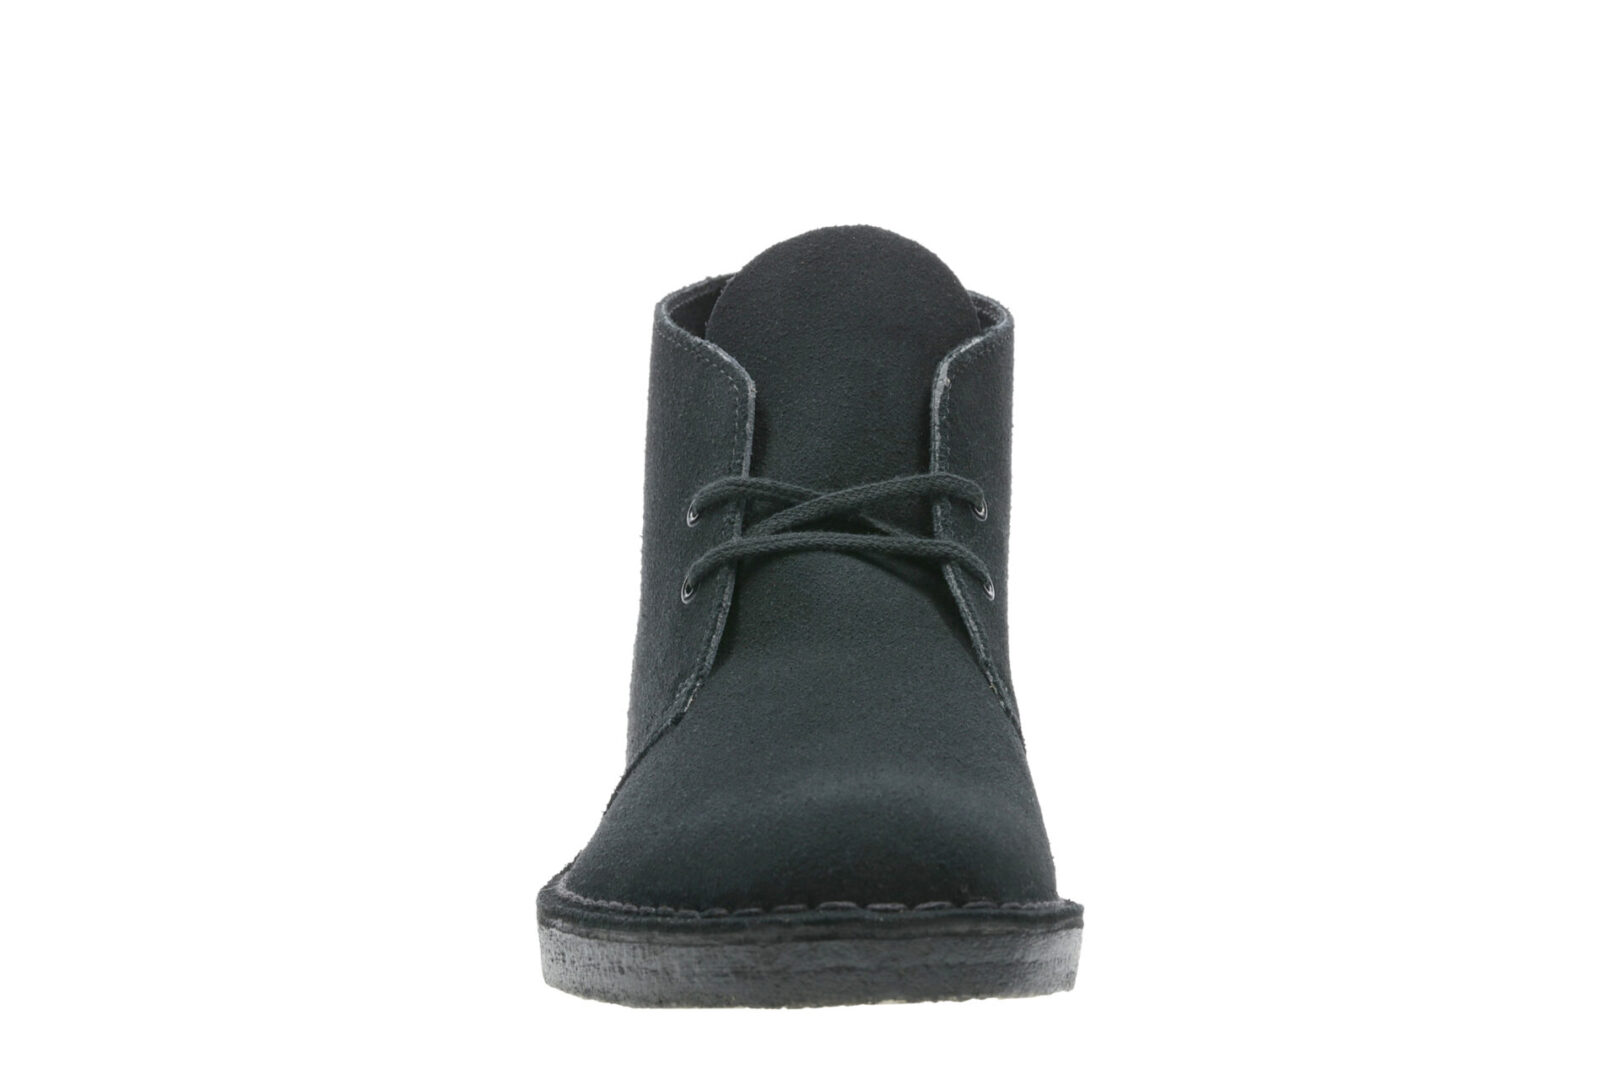 Clarks Desert Boot Black Suede 26155480 - Latch Shoe